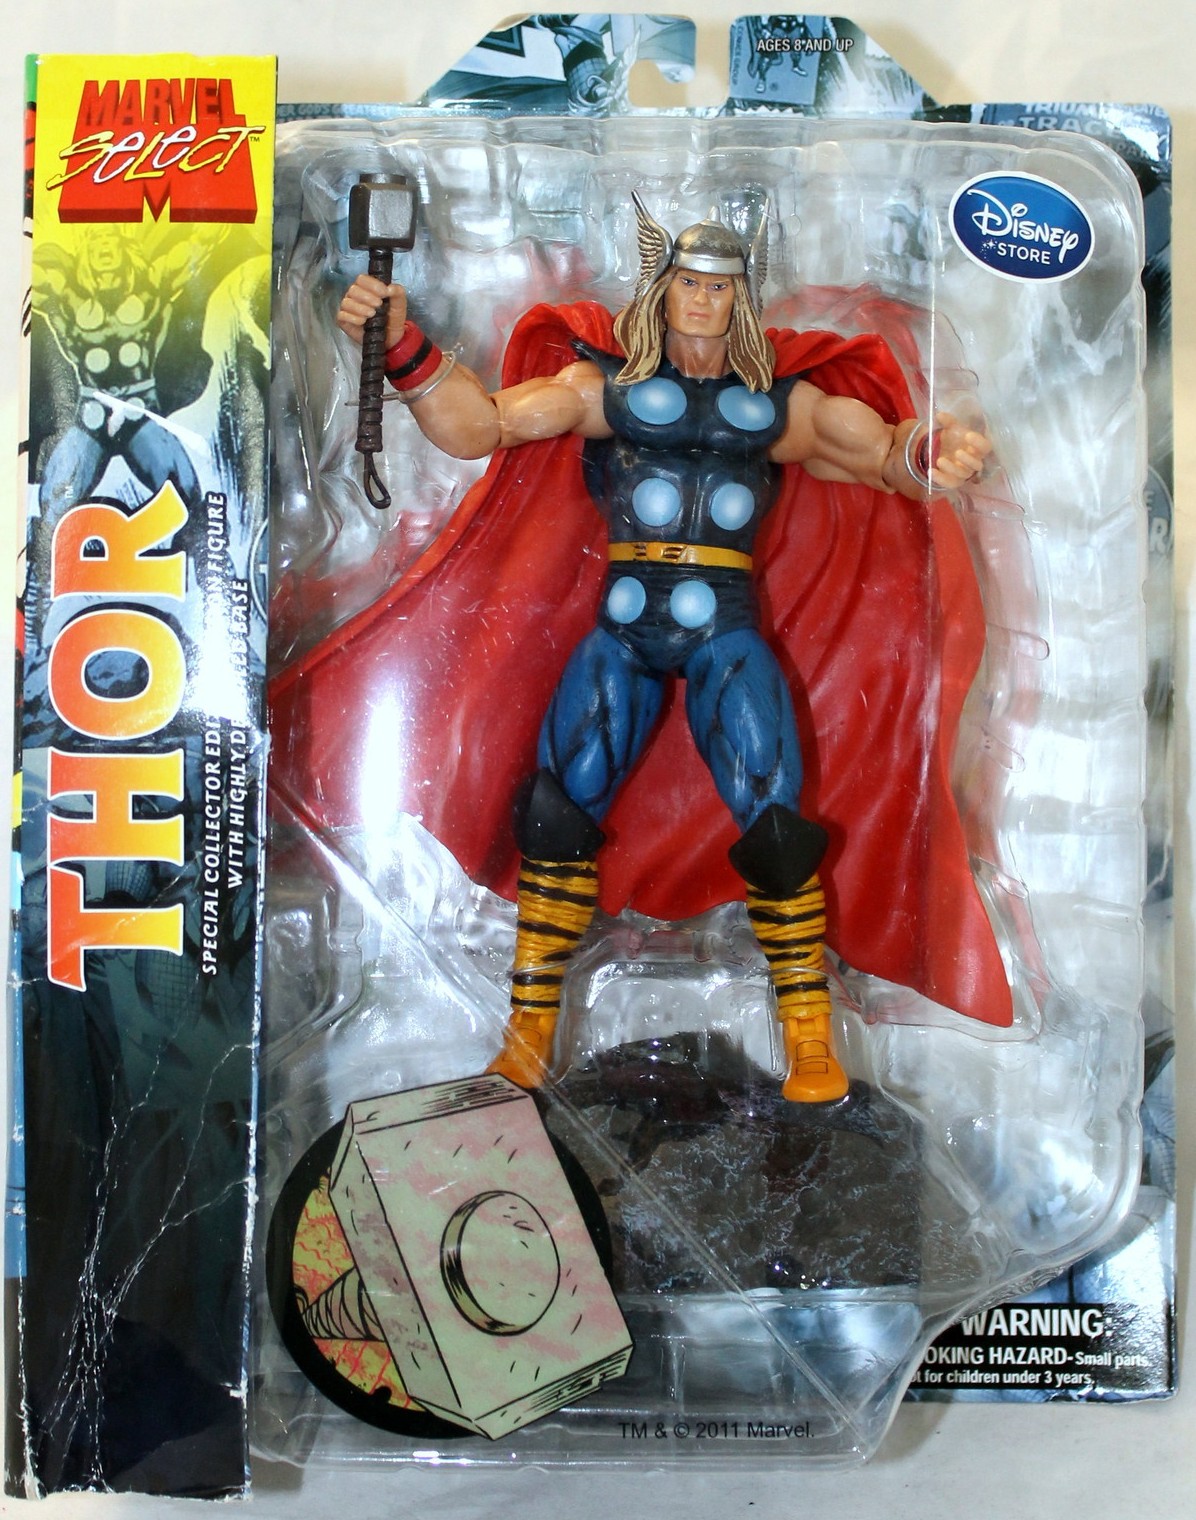 Marvel Select Classic Thor Figure Disney Store Exclusive e1377031428782